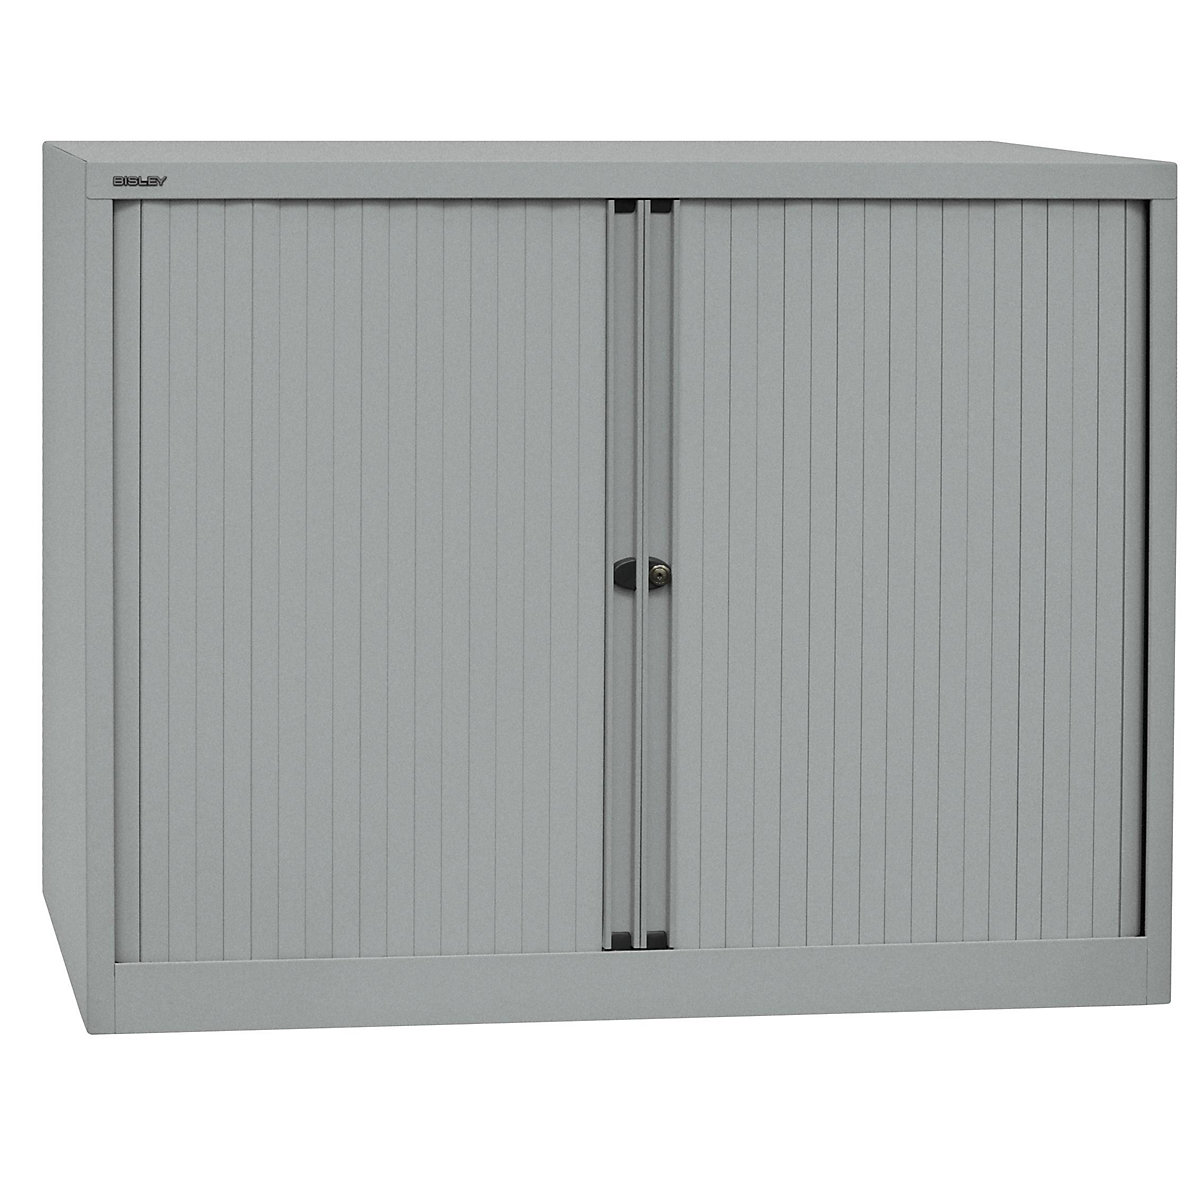 EURO roller shutter cupboard – BISLEY, width 1200 mm, 2 shelves, silver-5